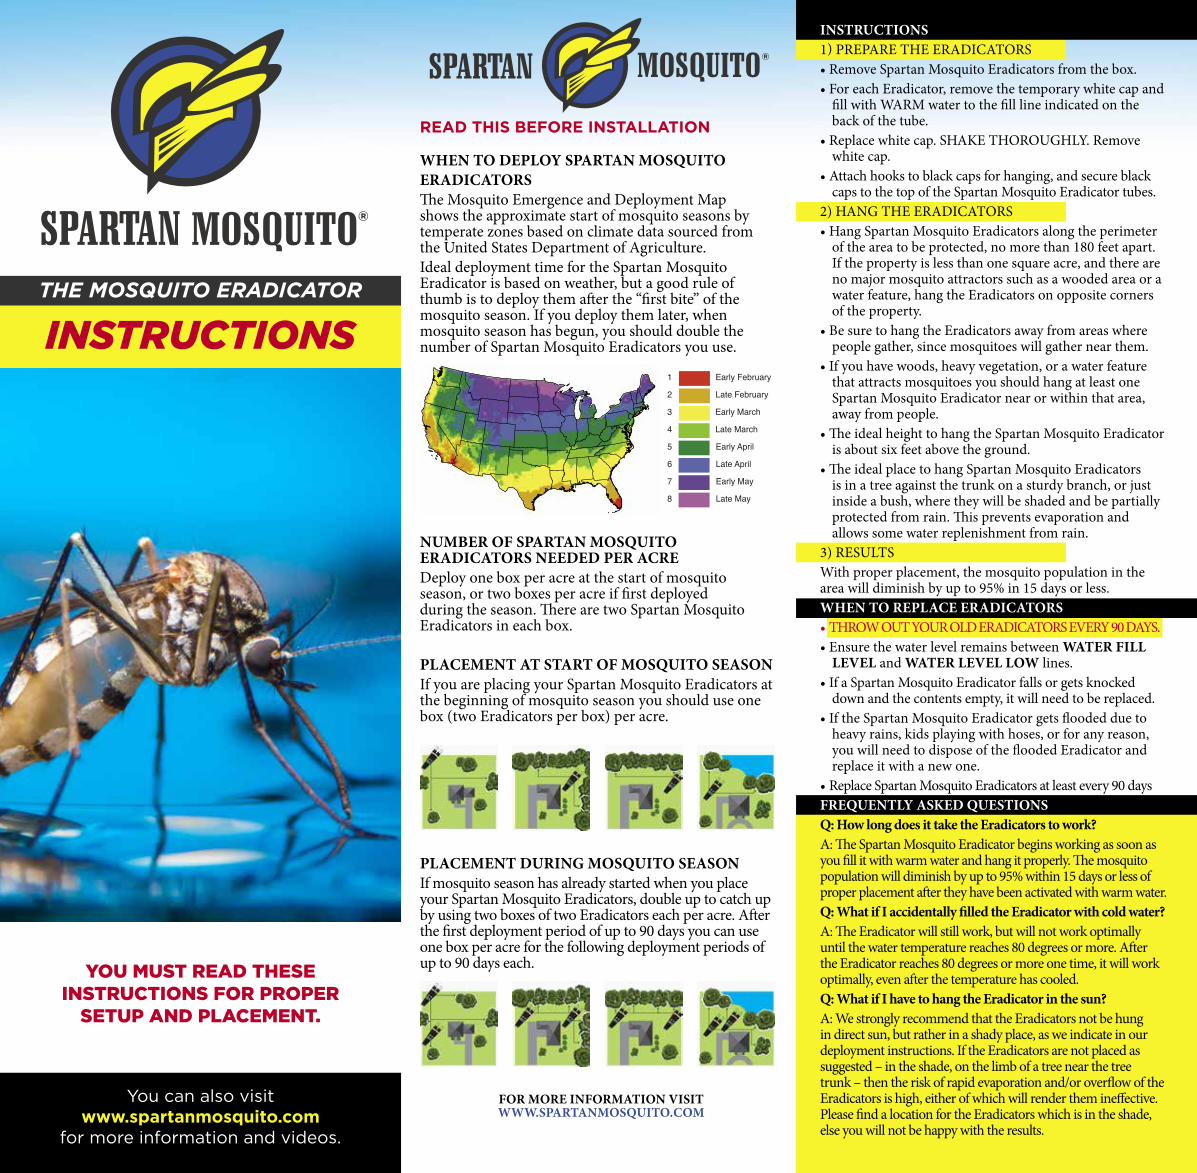 Pdf The Mosquito Eradicator Instructions Instructionspdf · 2019 05